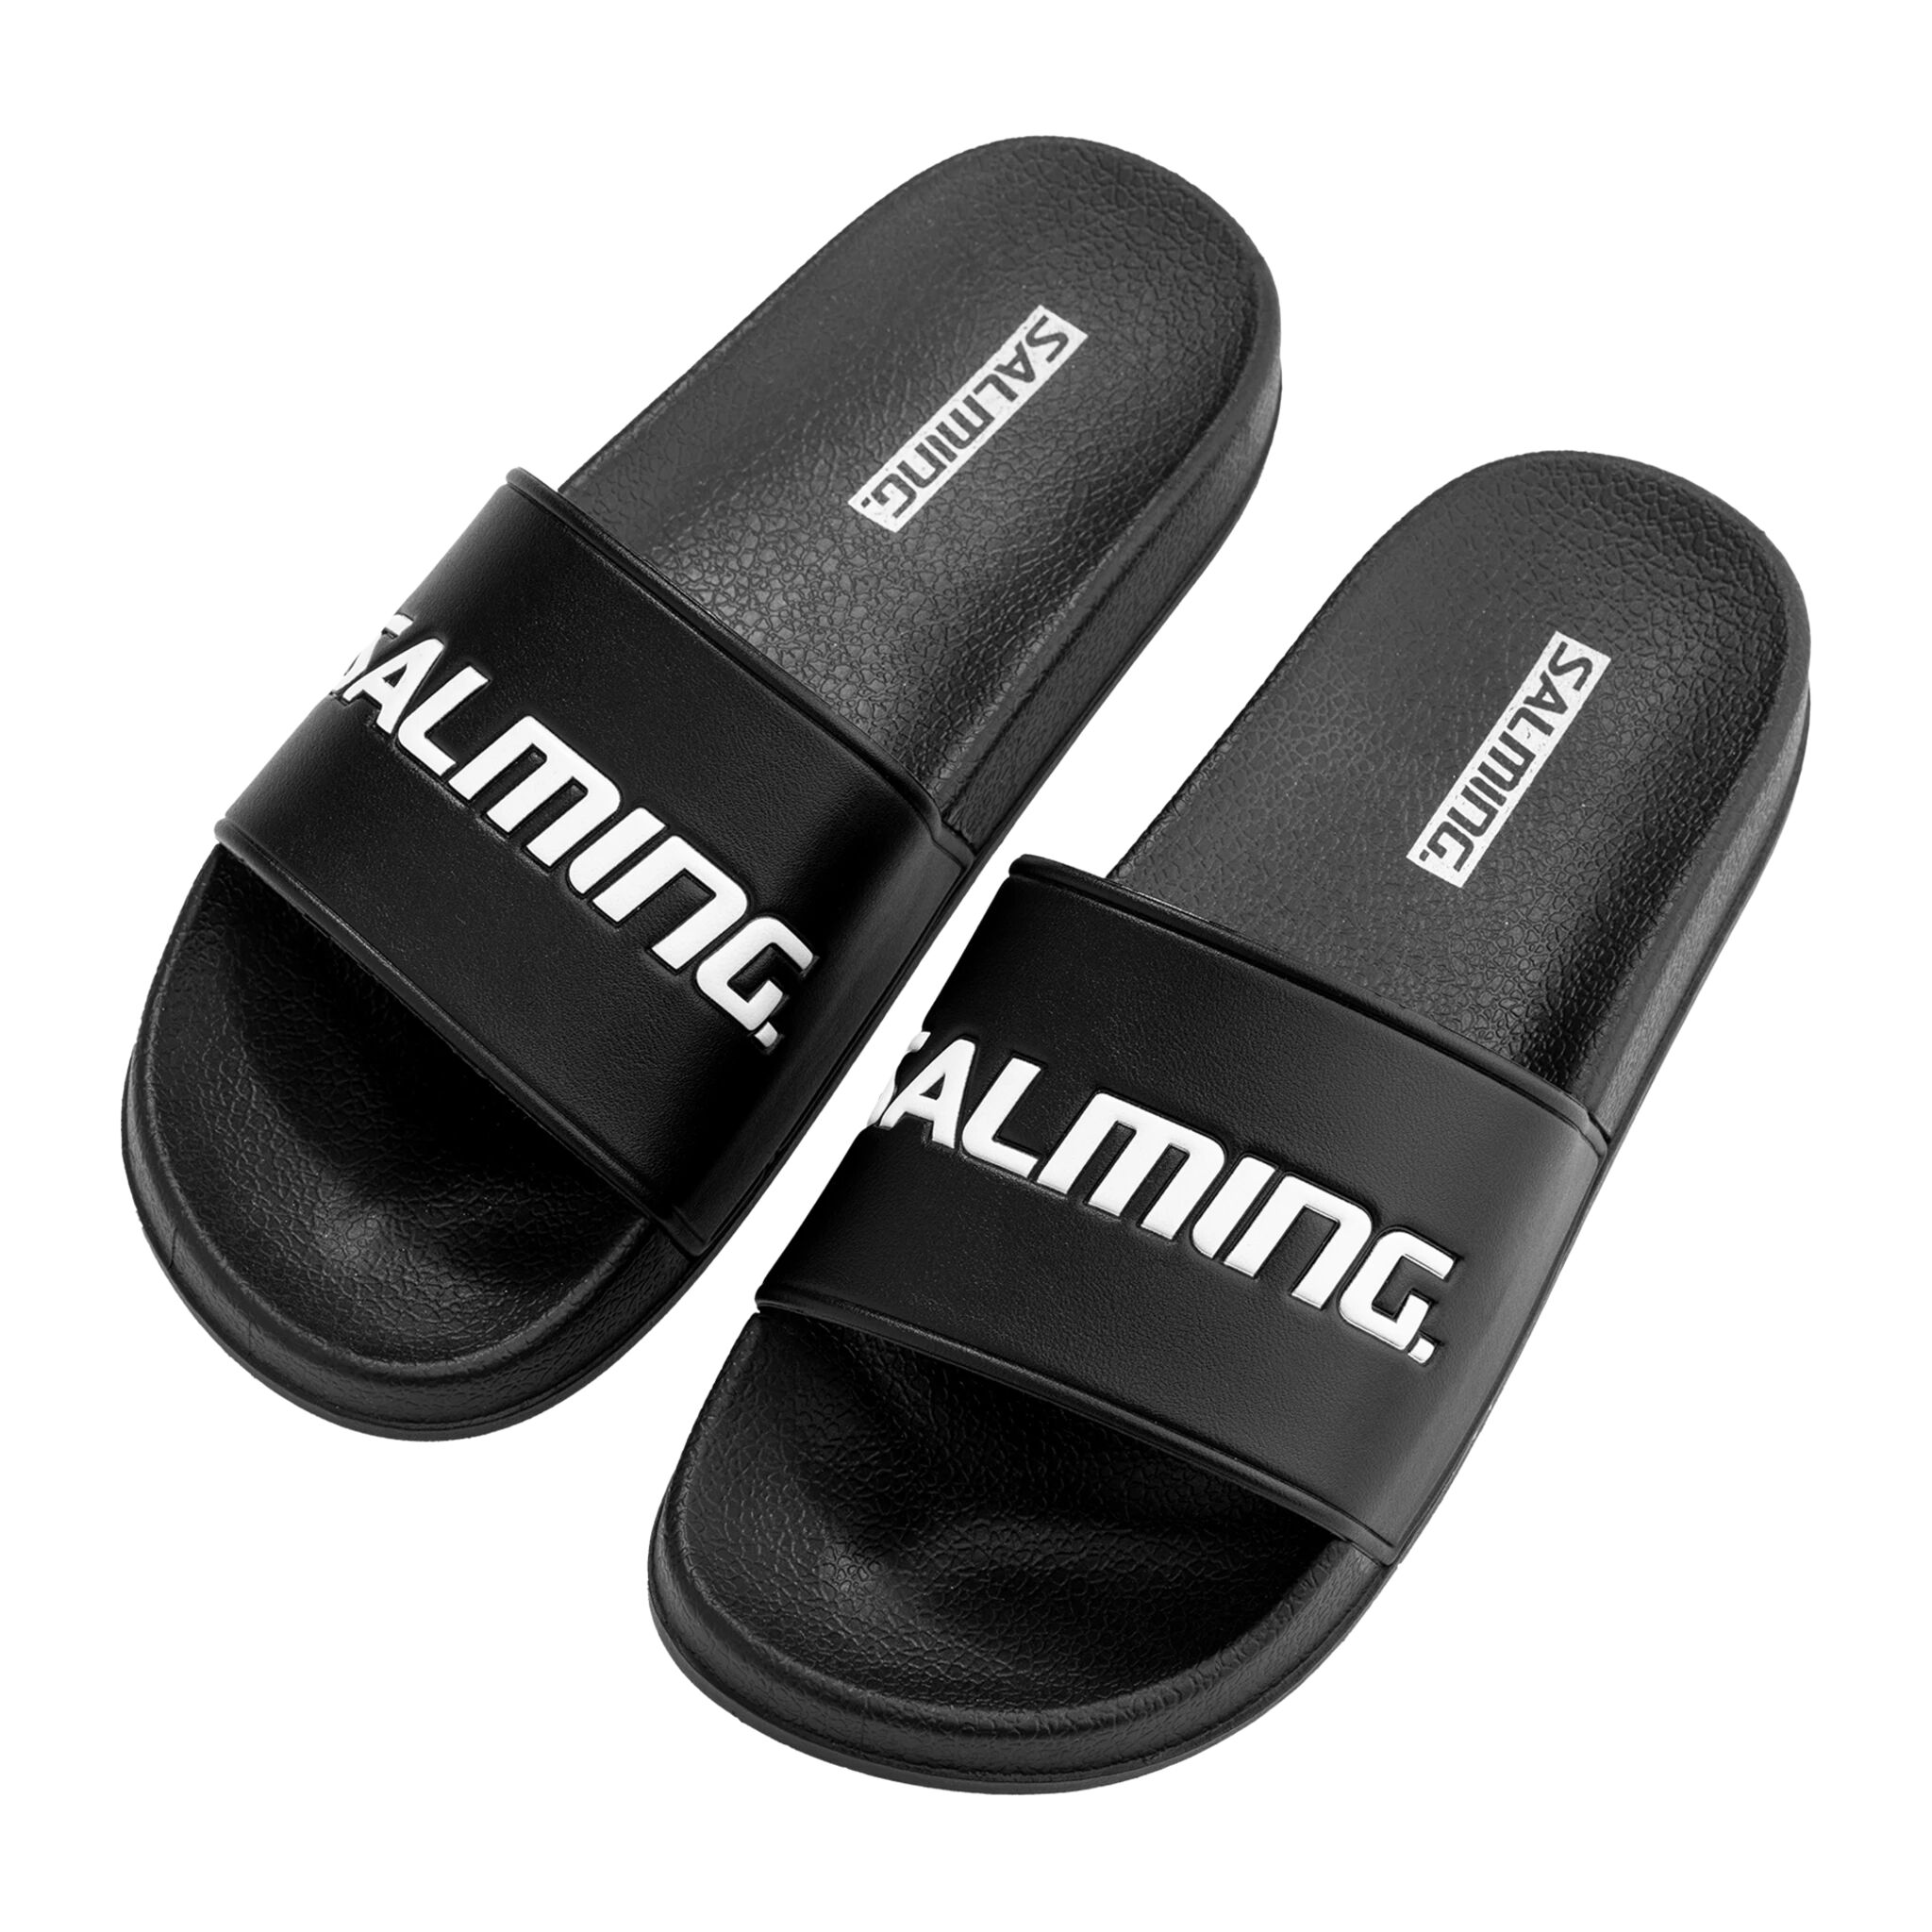 Salming Comfort Shower Sandal JR/SR-21/22, slippers 42/43 BLACK